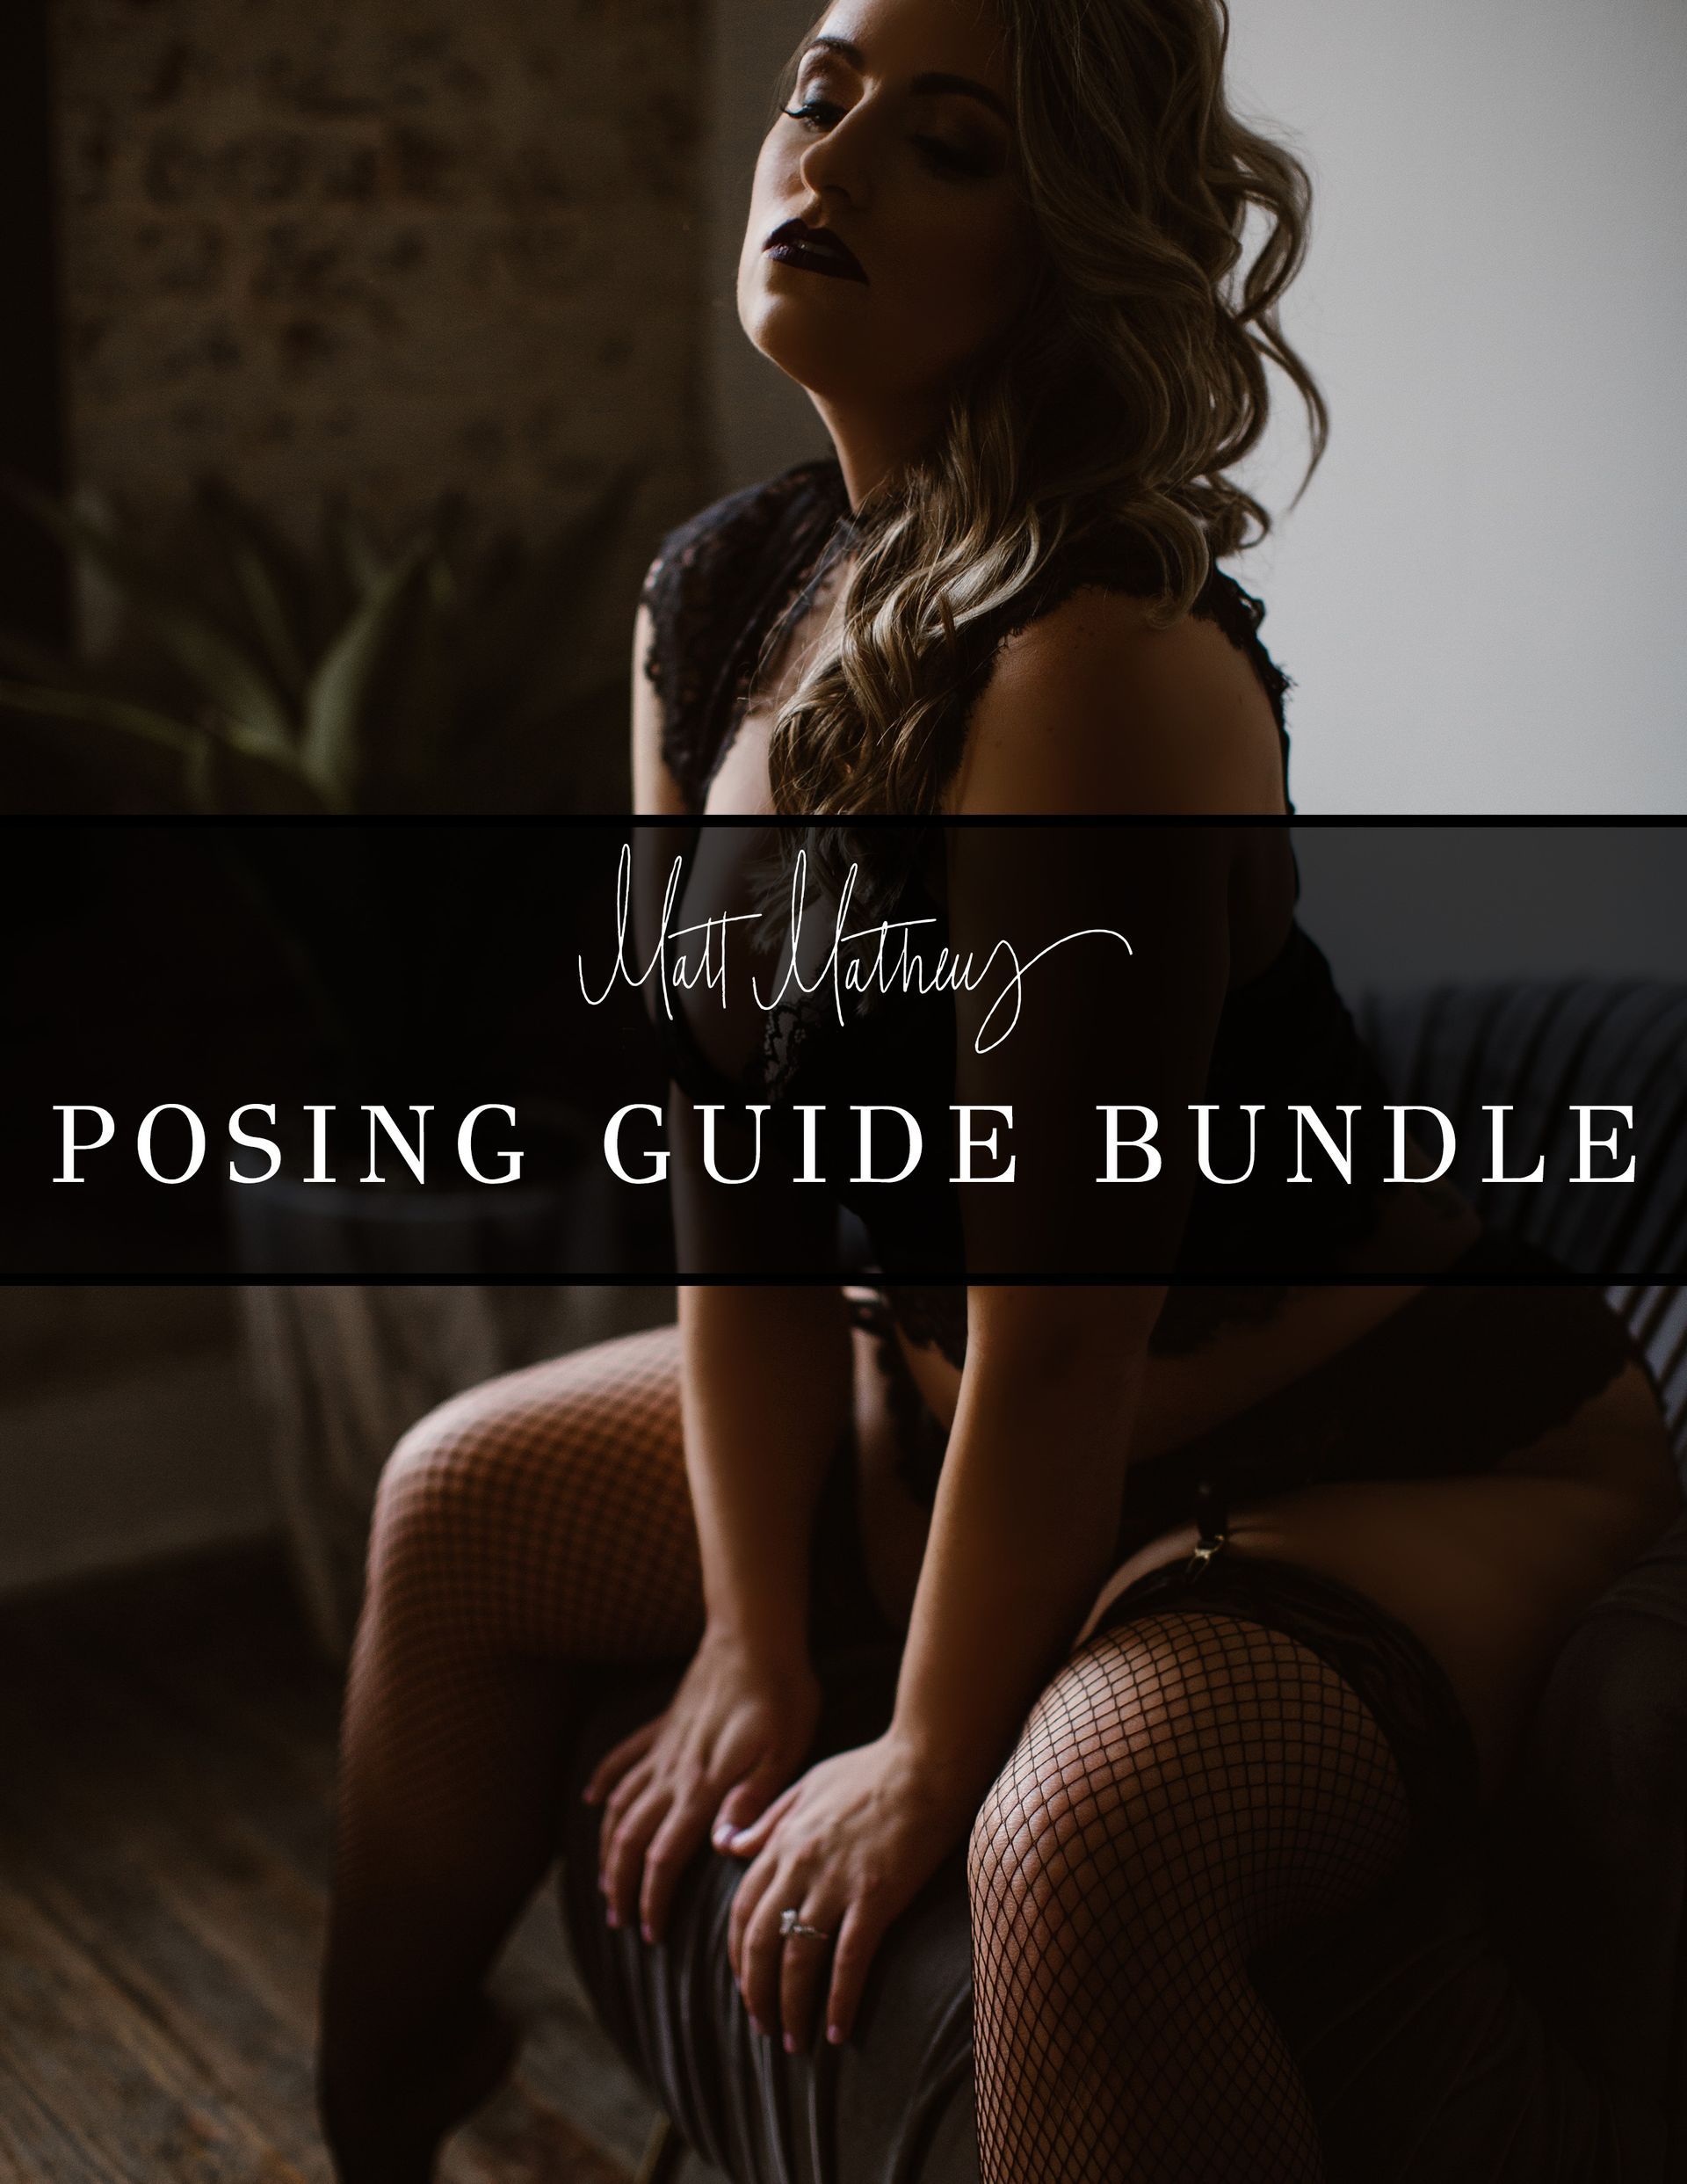 Boudoir Maternity Posing Guide By Matt Mathews